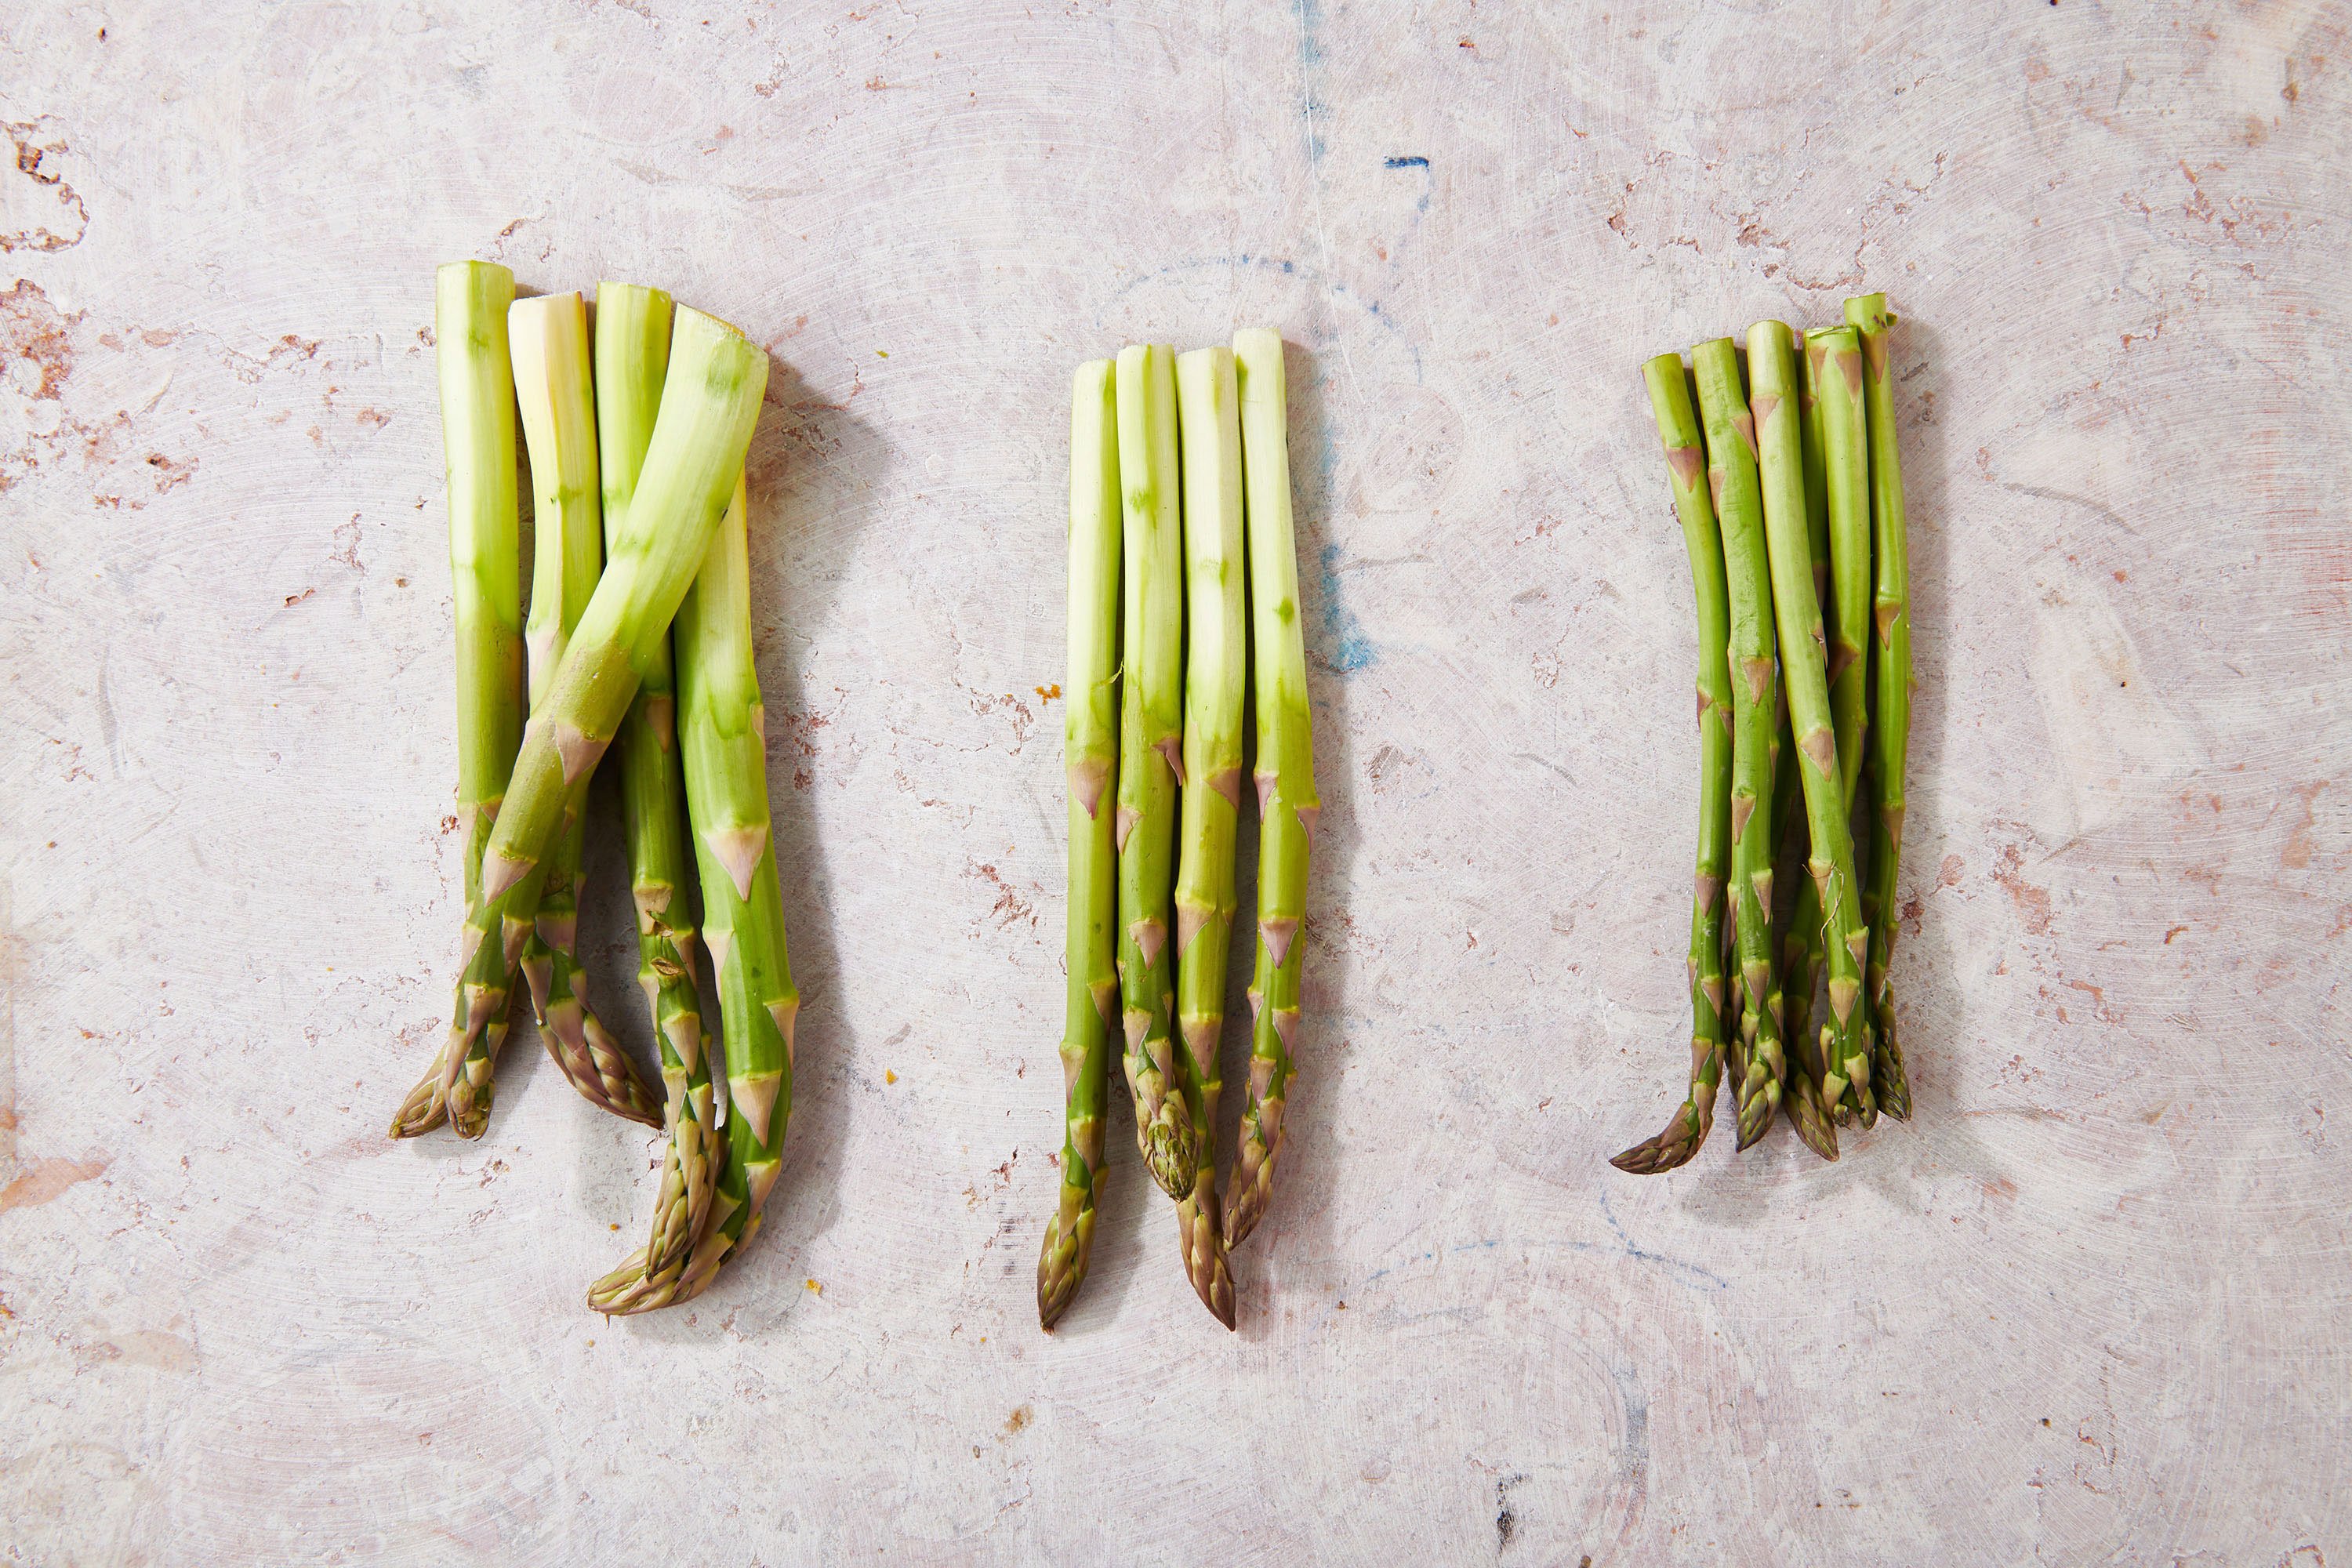 Thick, medium, and thin fresh asparagus spears on table.